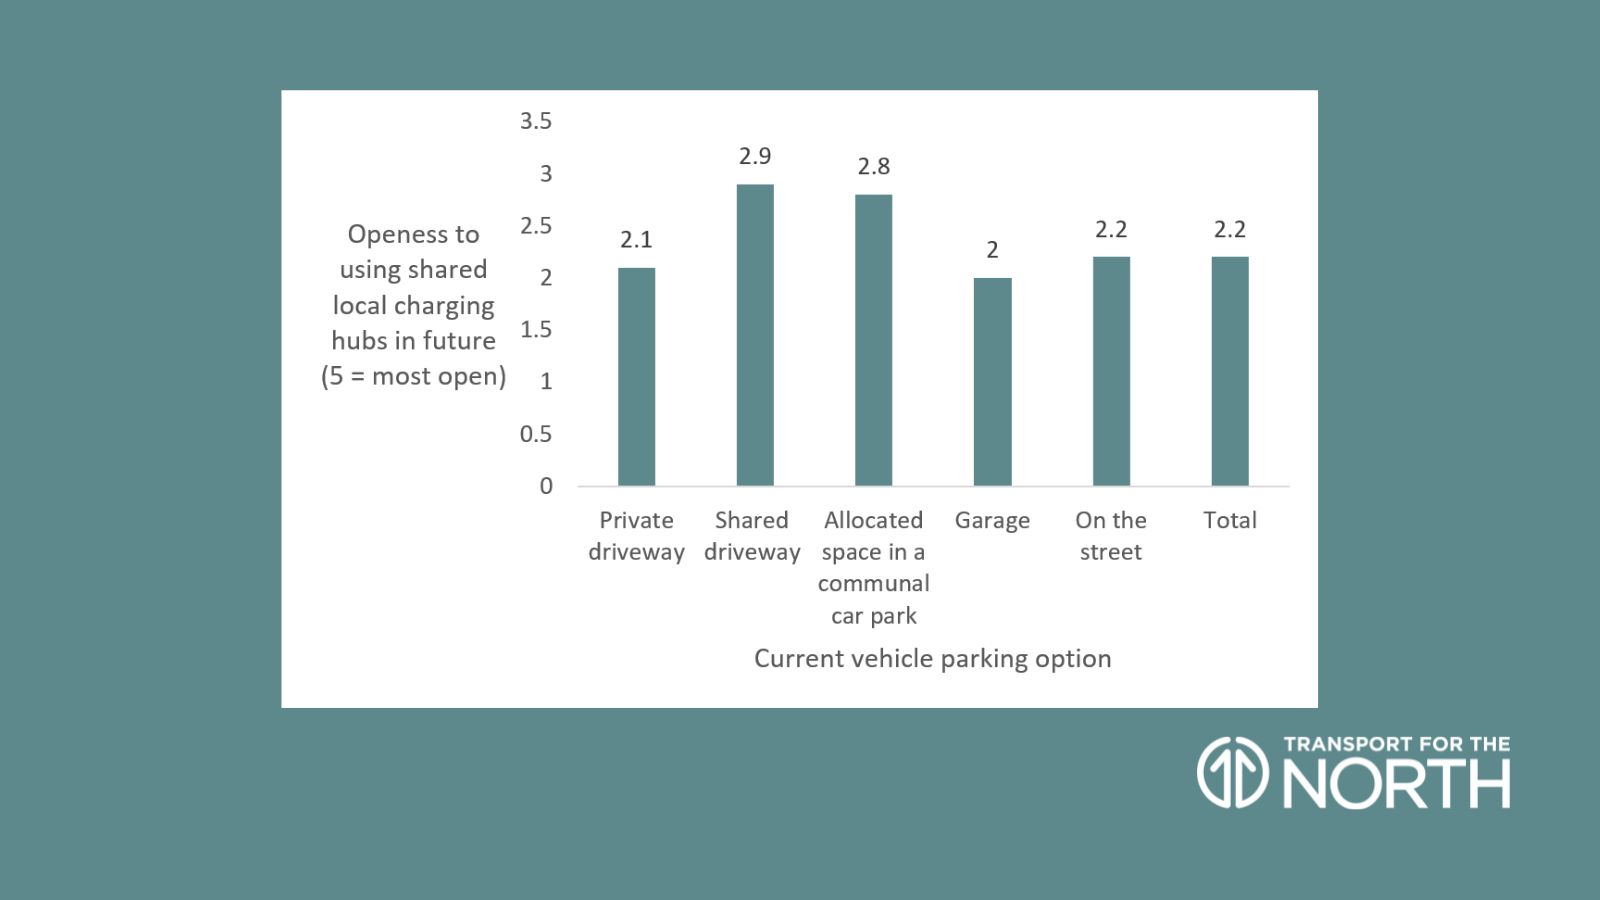 Consumer attitudes to local charging hubs